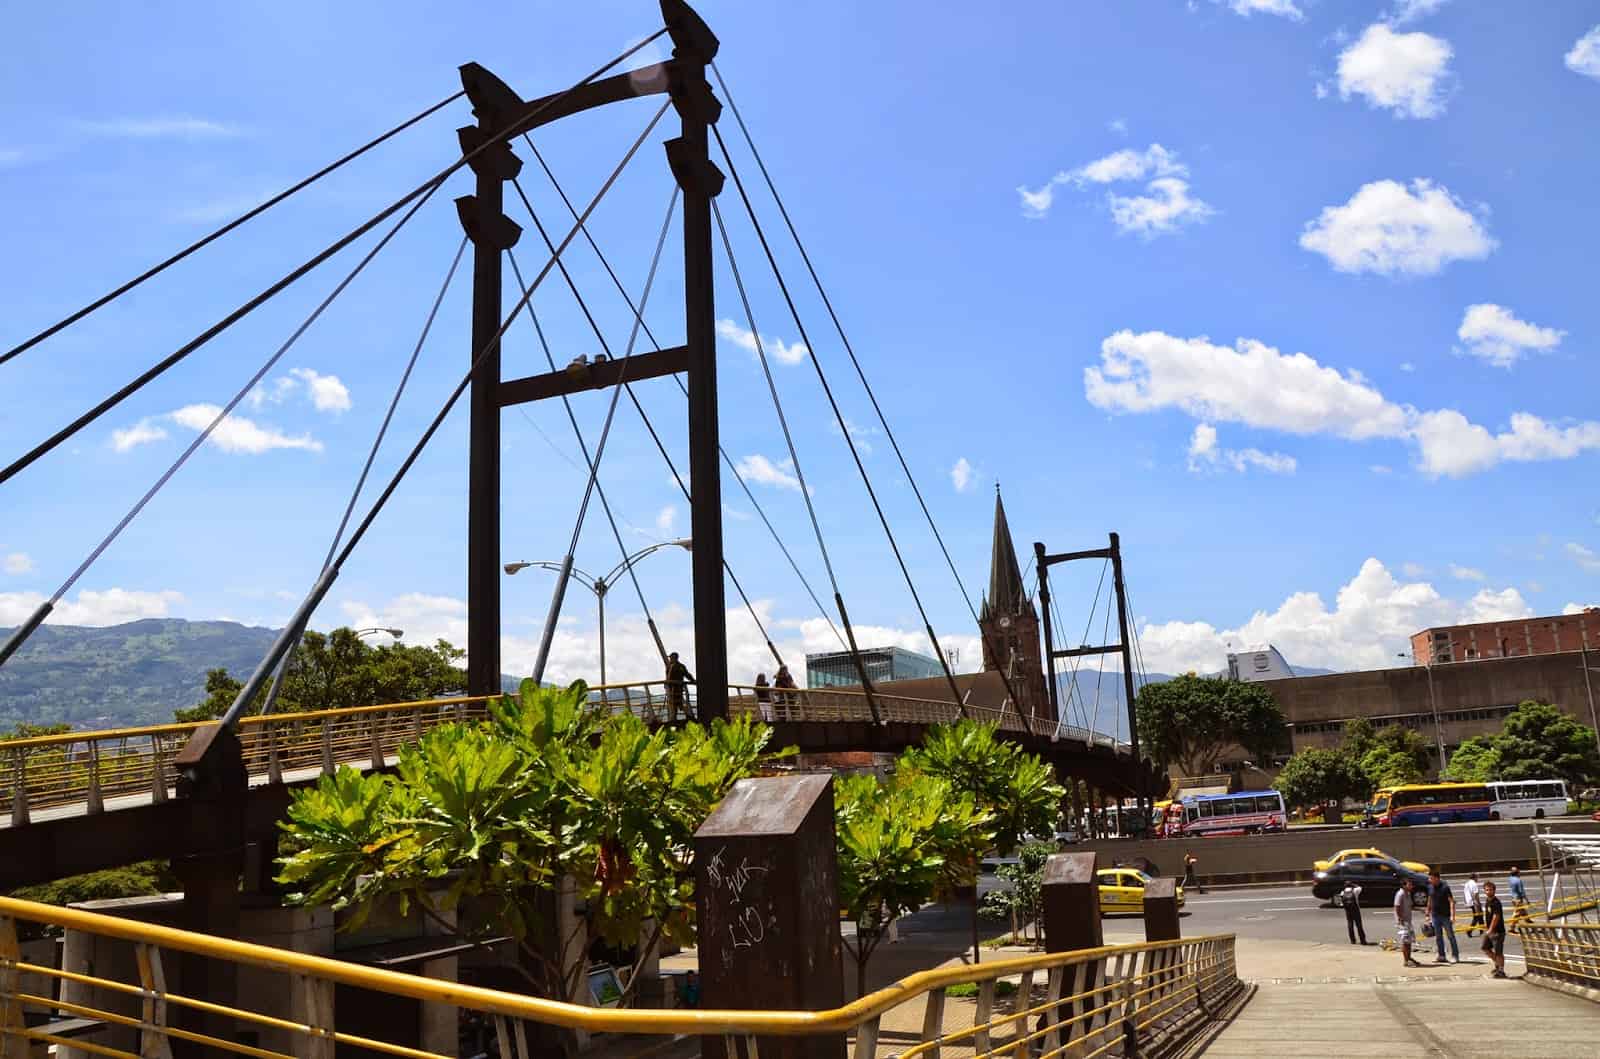 Footbridge in Medellín, Antioquia, Colombia